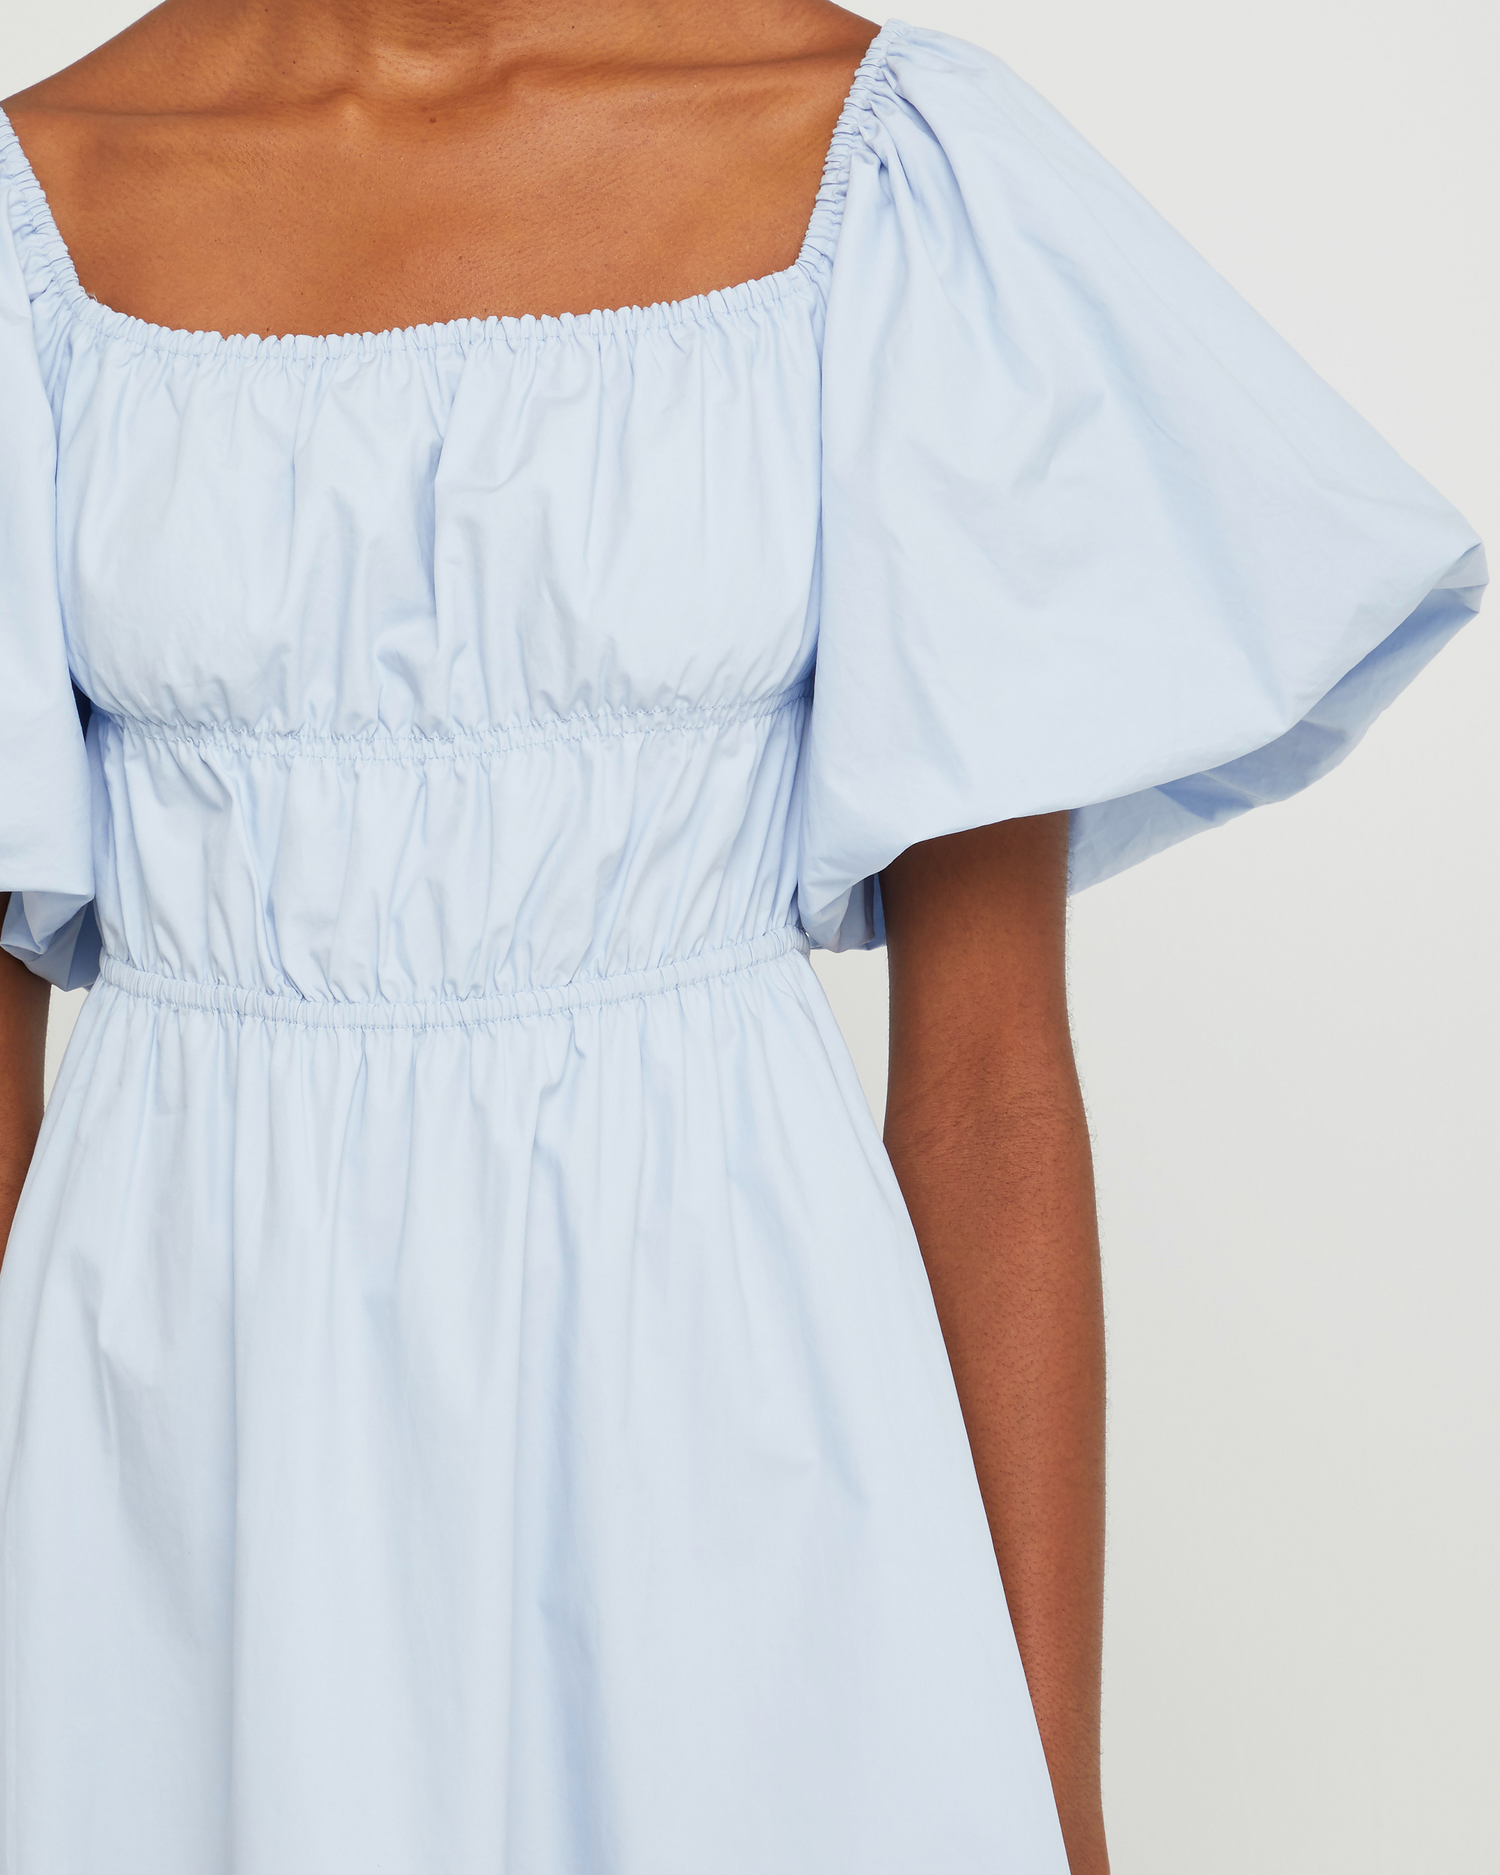 Sixth image of Leanna Cotton Dress, a blue mini dress, puff sleeves, gathered bodice, short sleeve